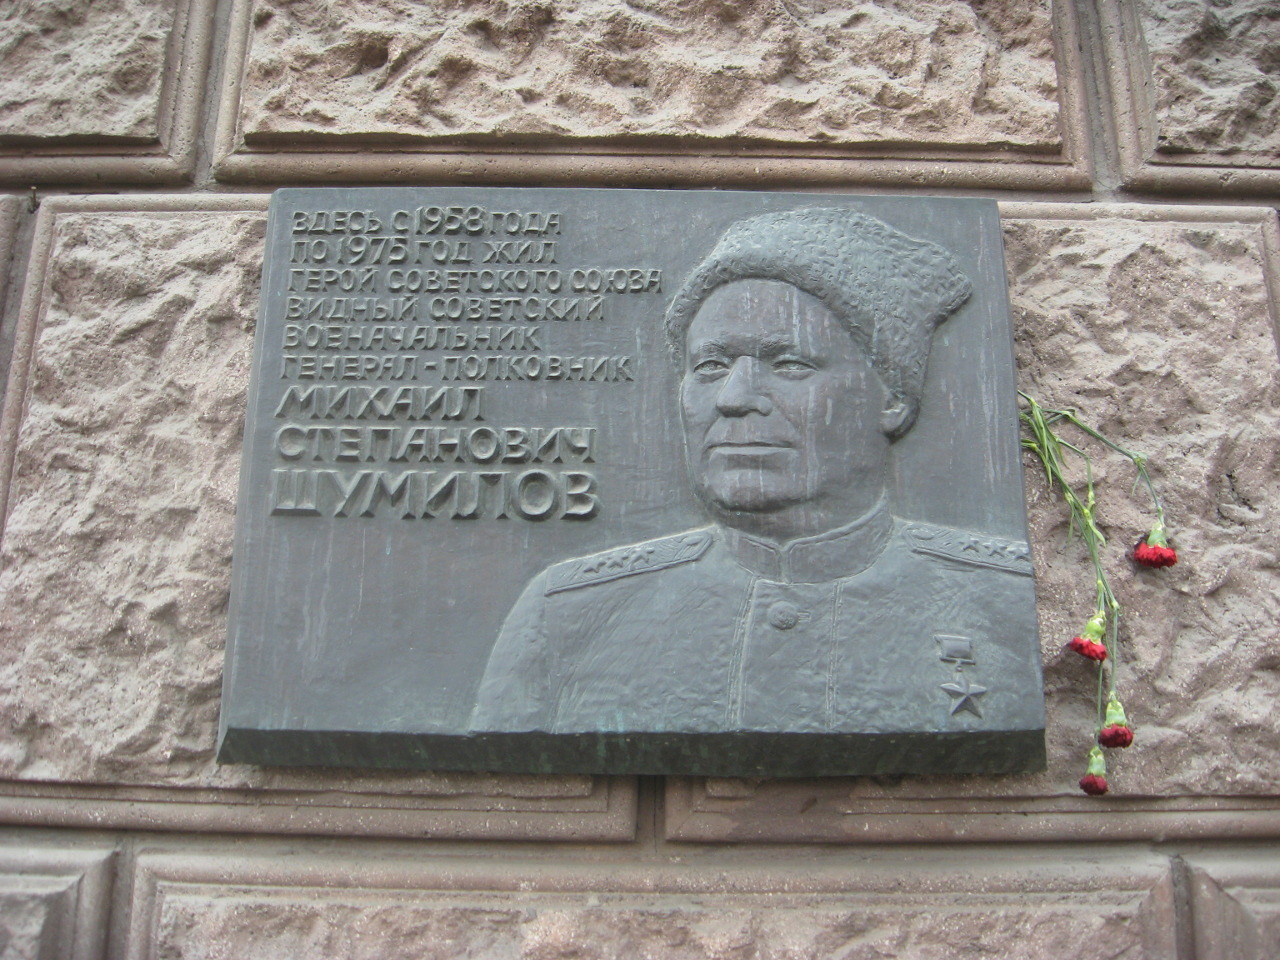 Moscow, Ленинградский проспект, 75. Moscow — Memorial plaques